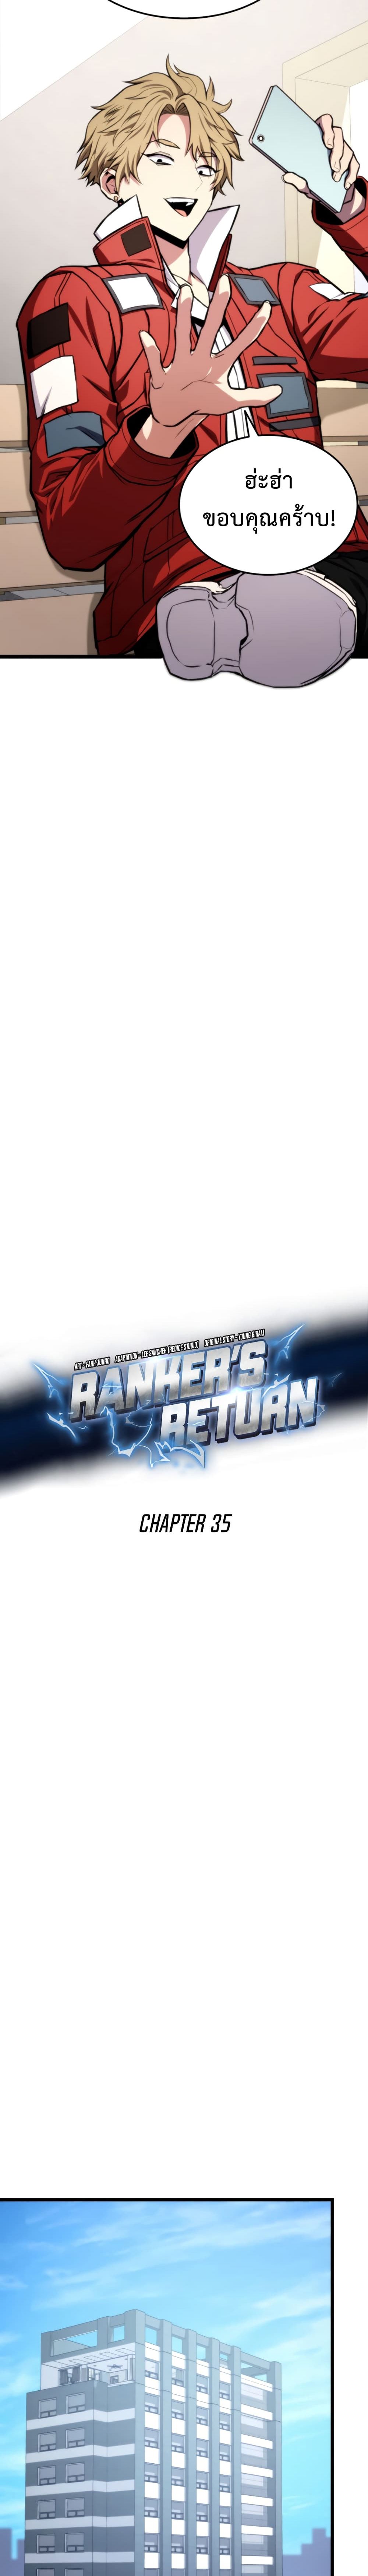 Ranker's Return (Remake) 35-35